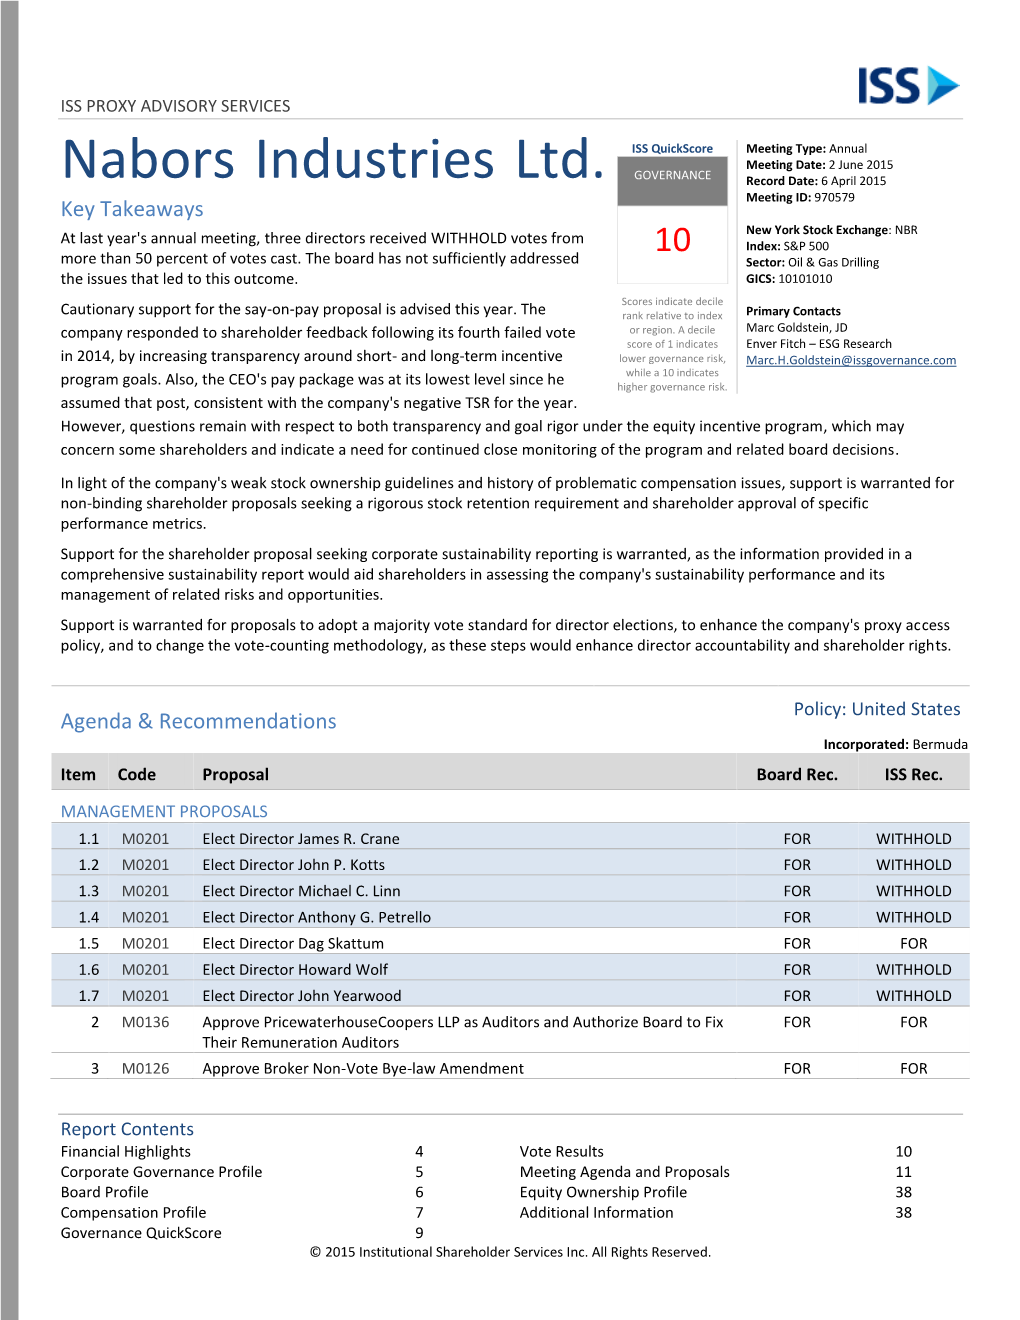 Nabors Industries Ltd